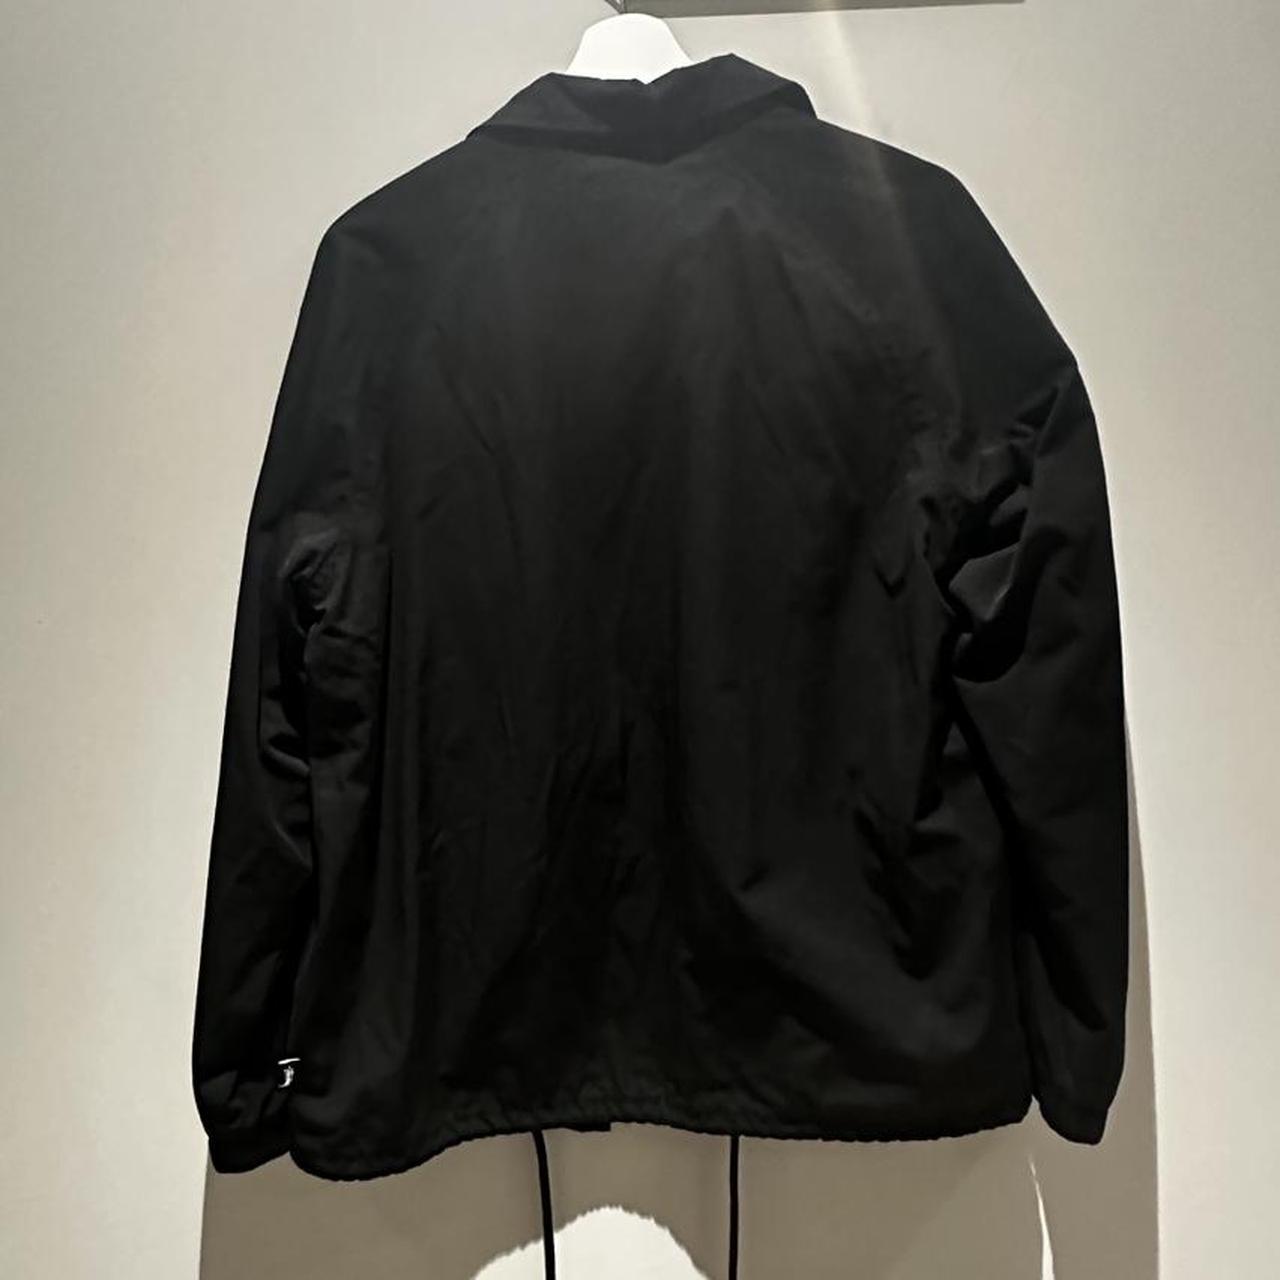 stussy jacket osaka limited edition size s - Depop